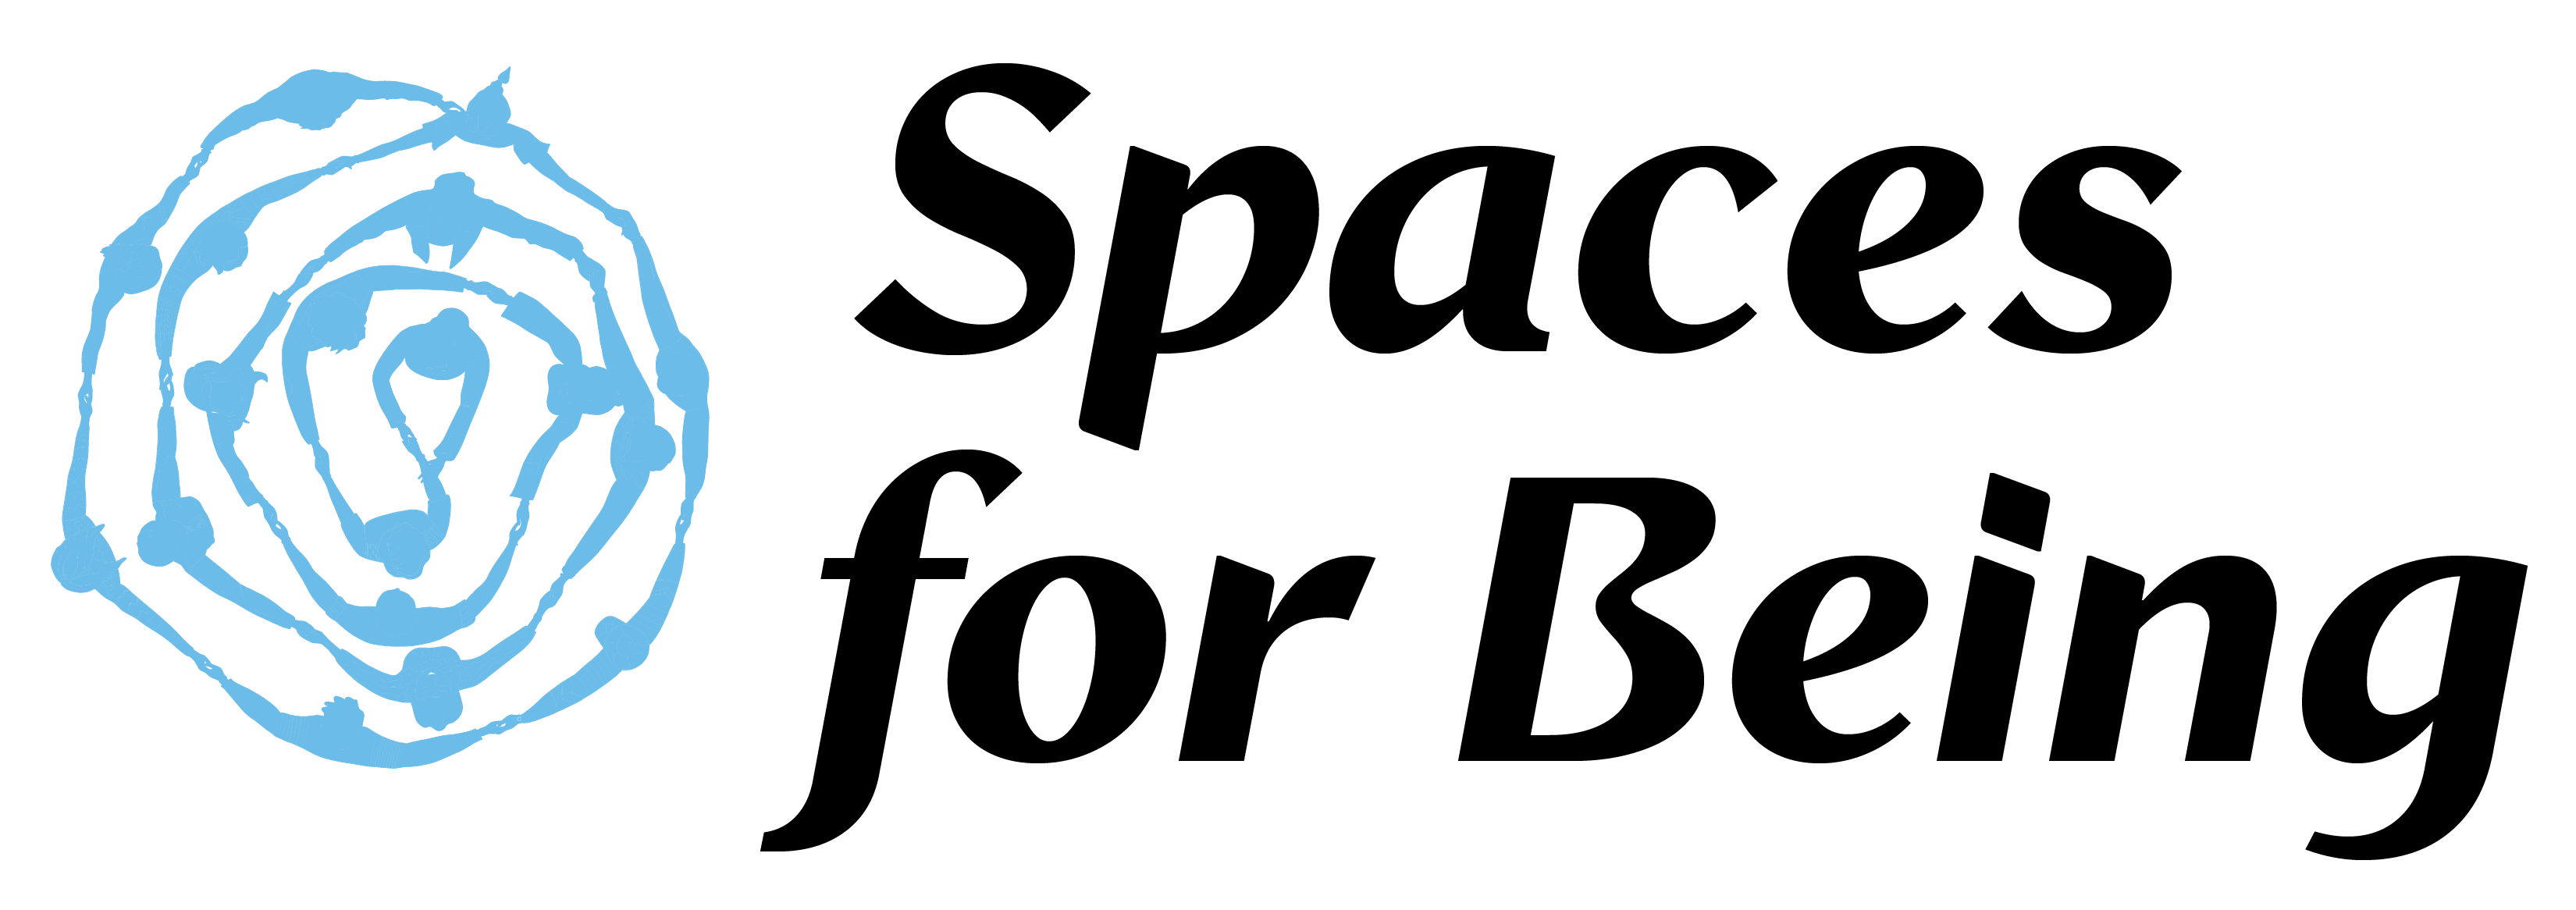 hub-brussels-logo